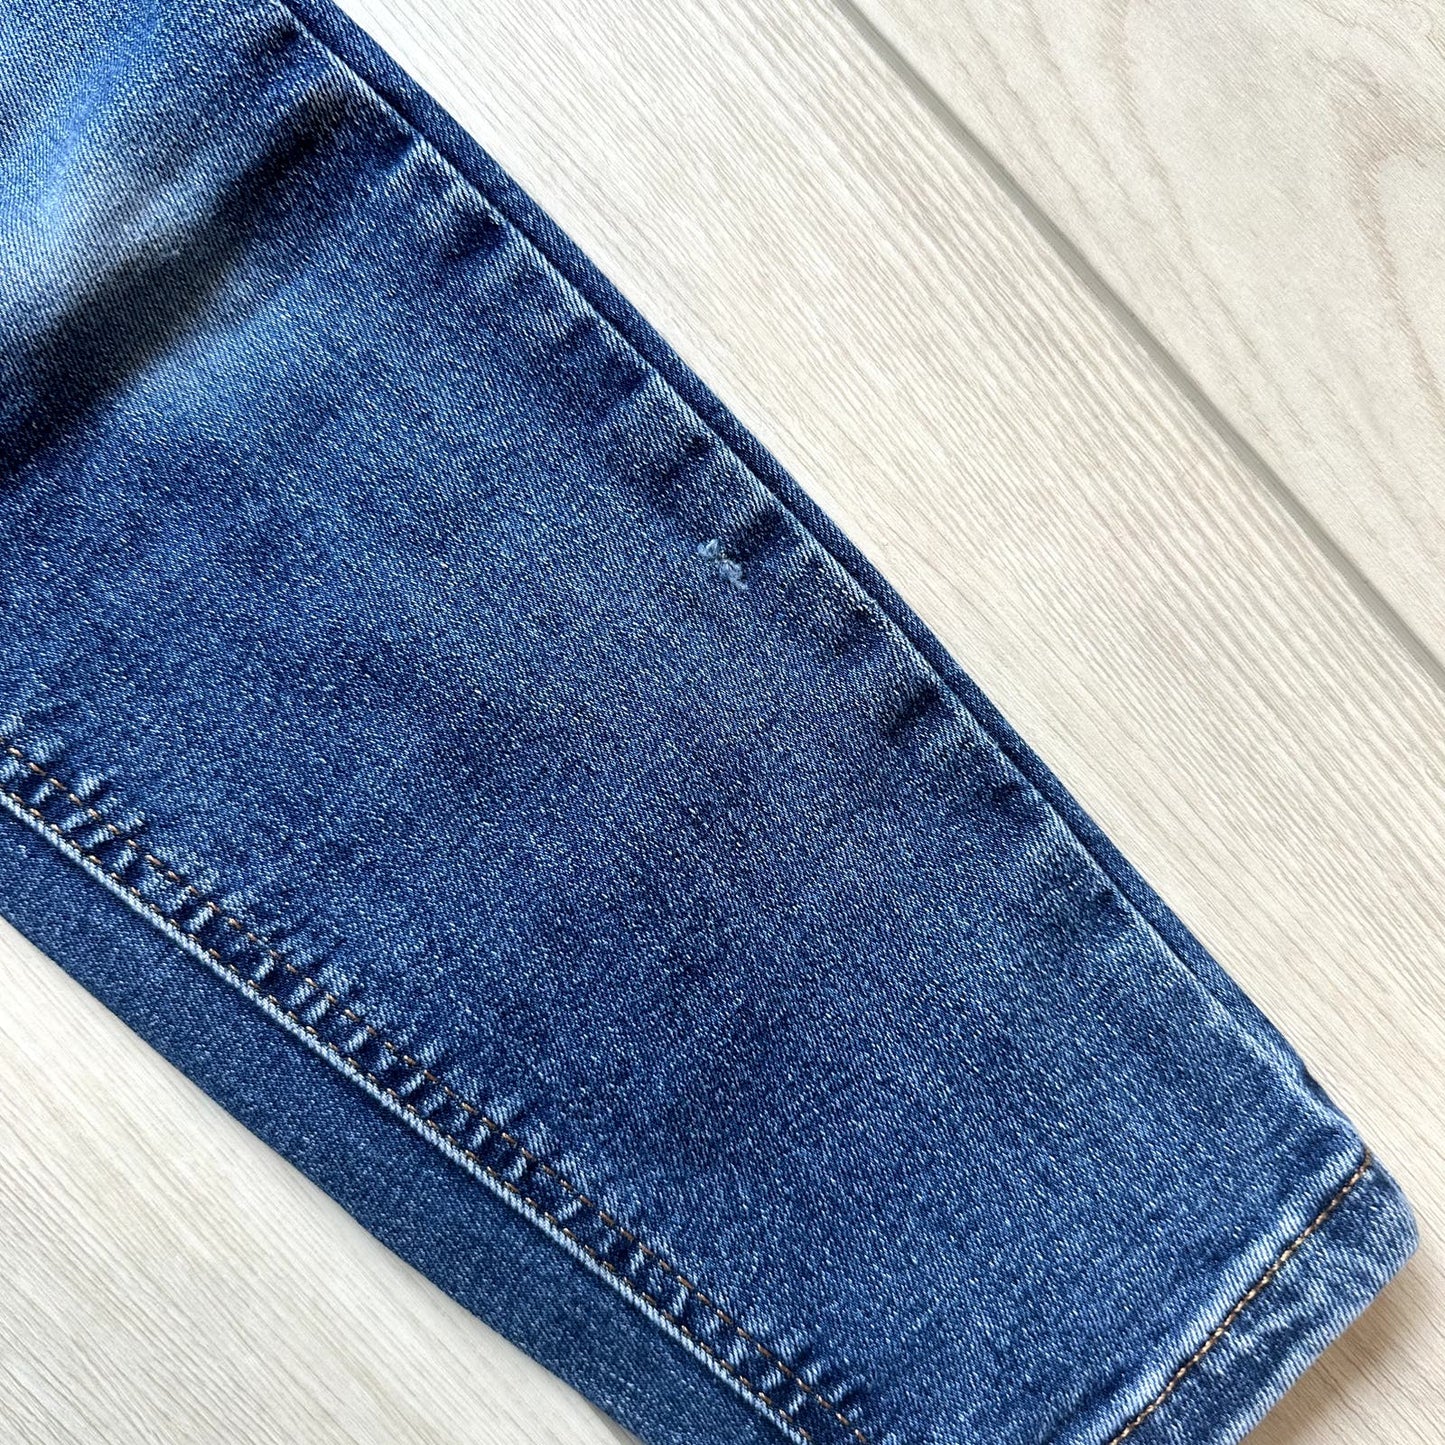 Topshop Jamie medium wash high waisted skinny jeans jeggings